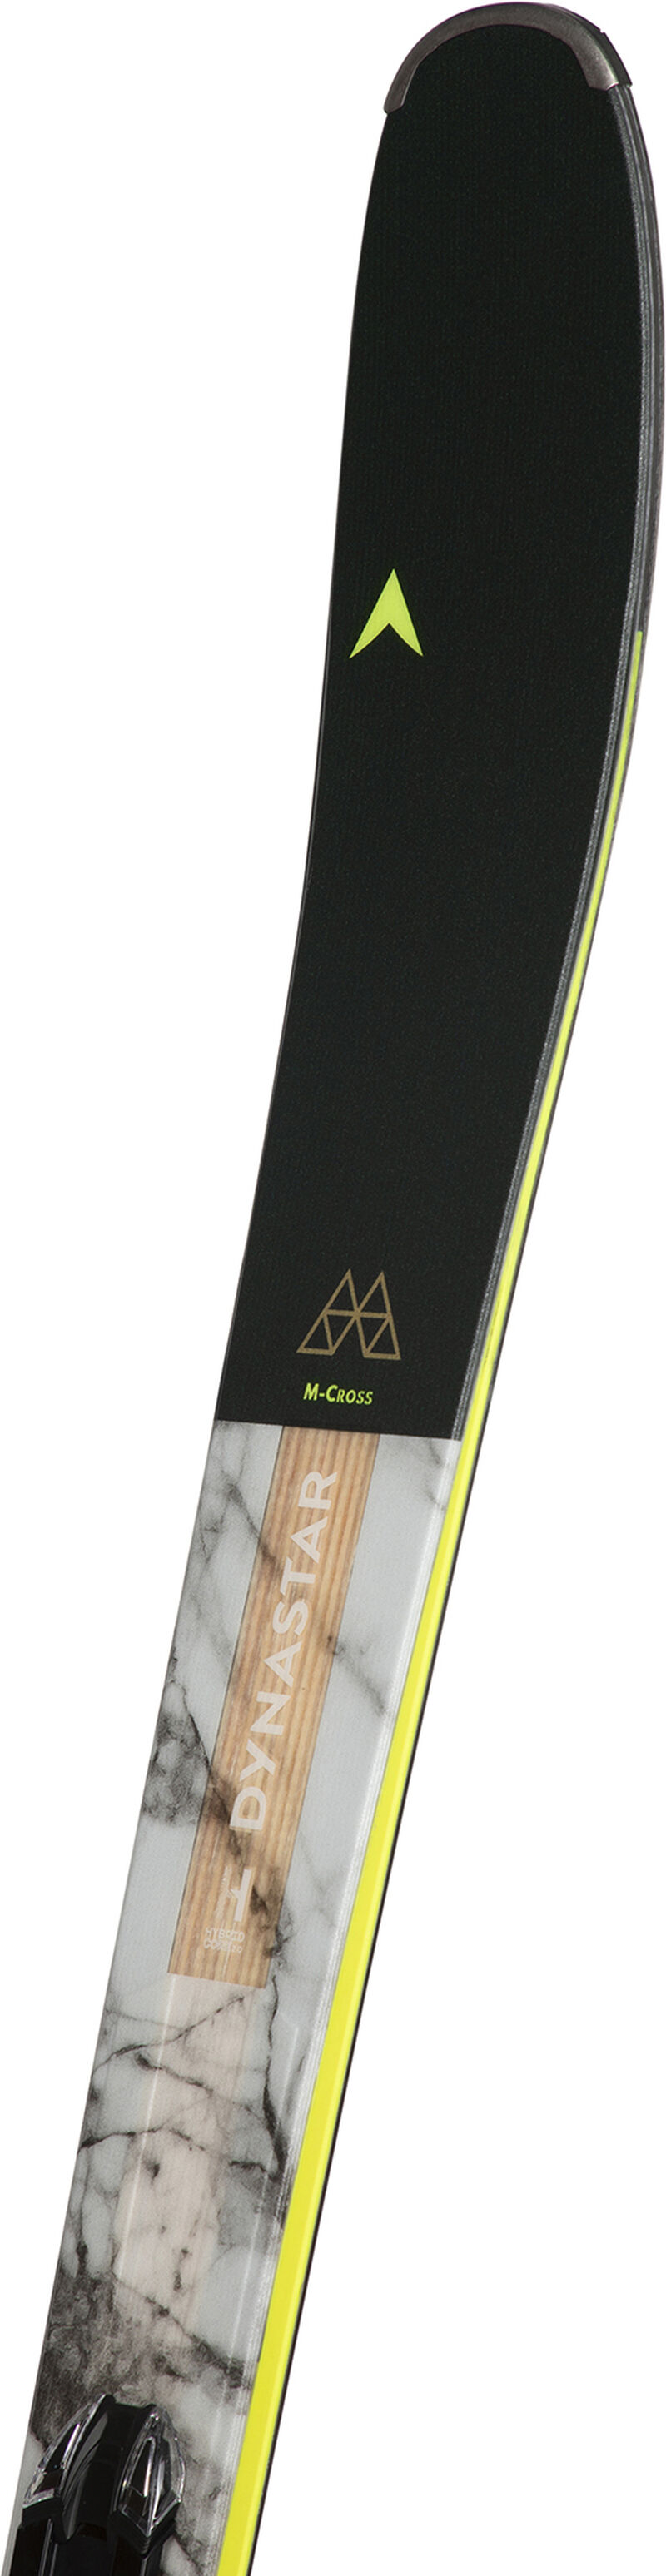 Men's all mountain skis M-Cross 82 Konect